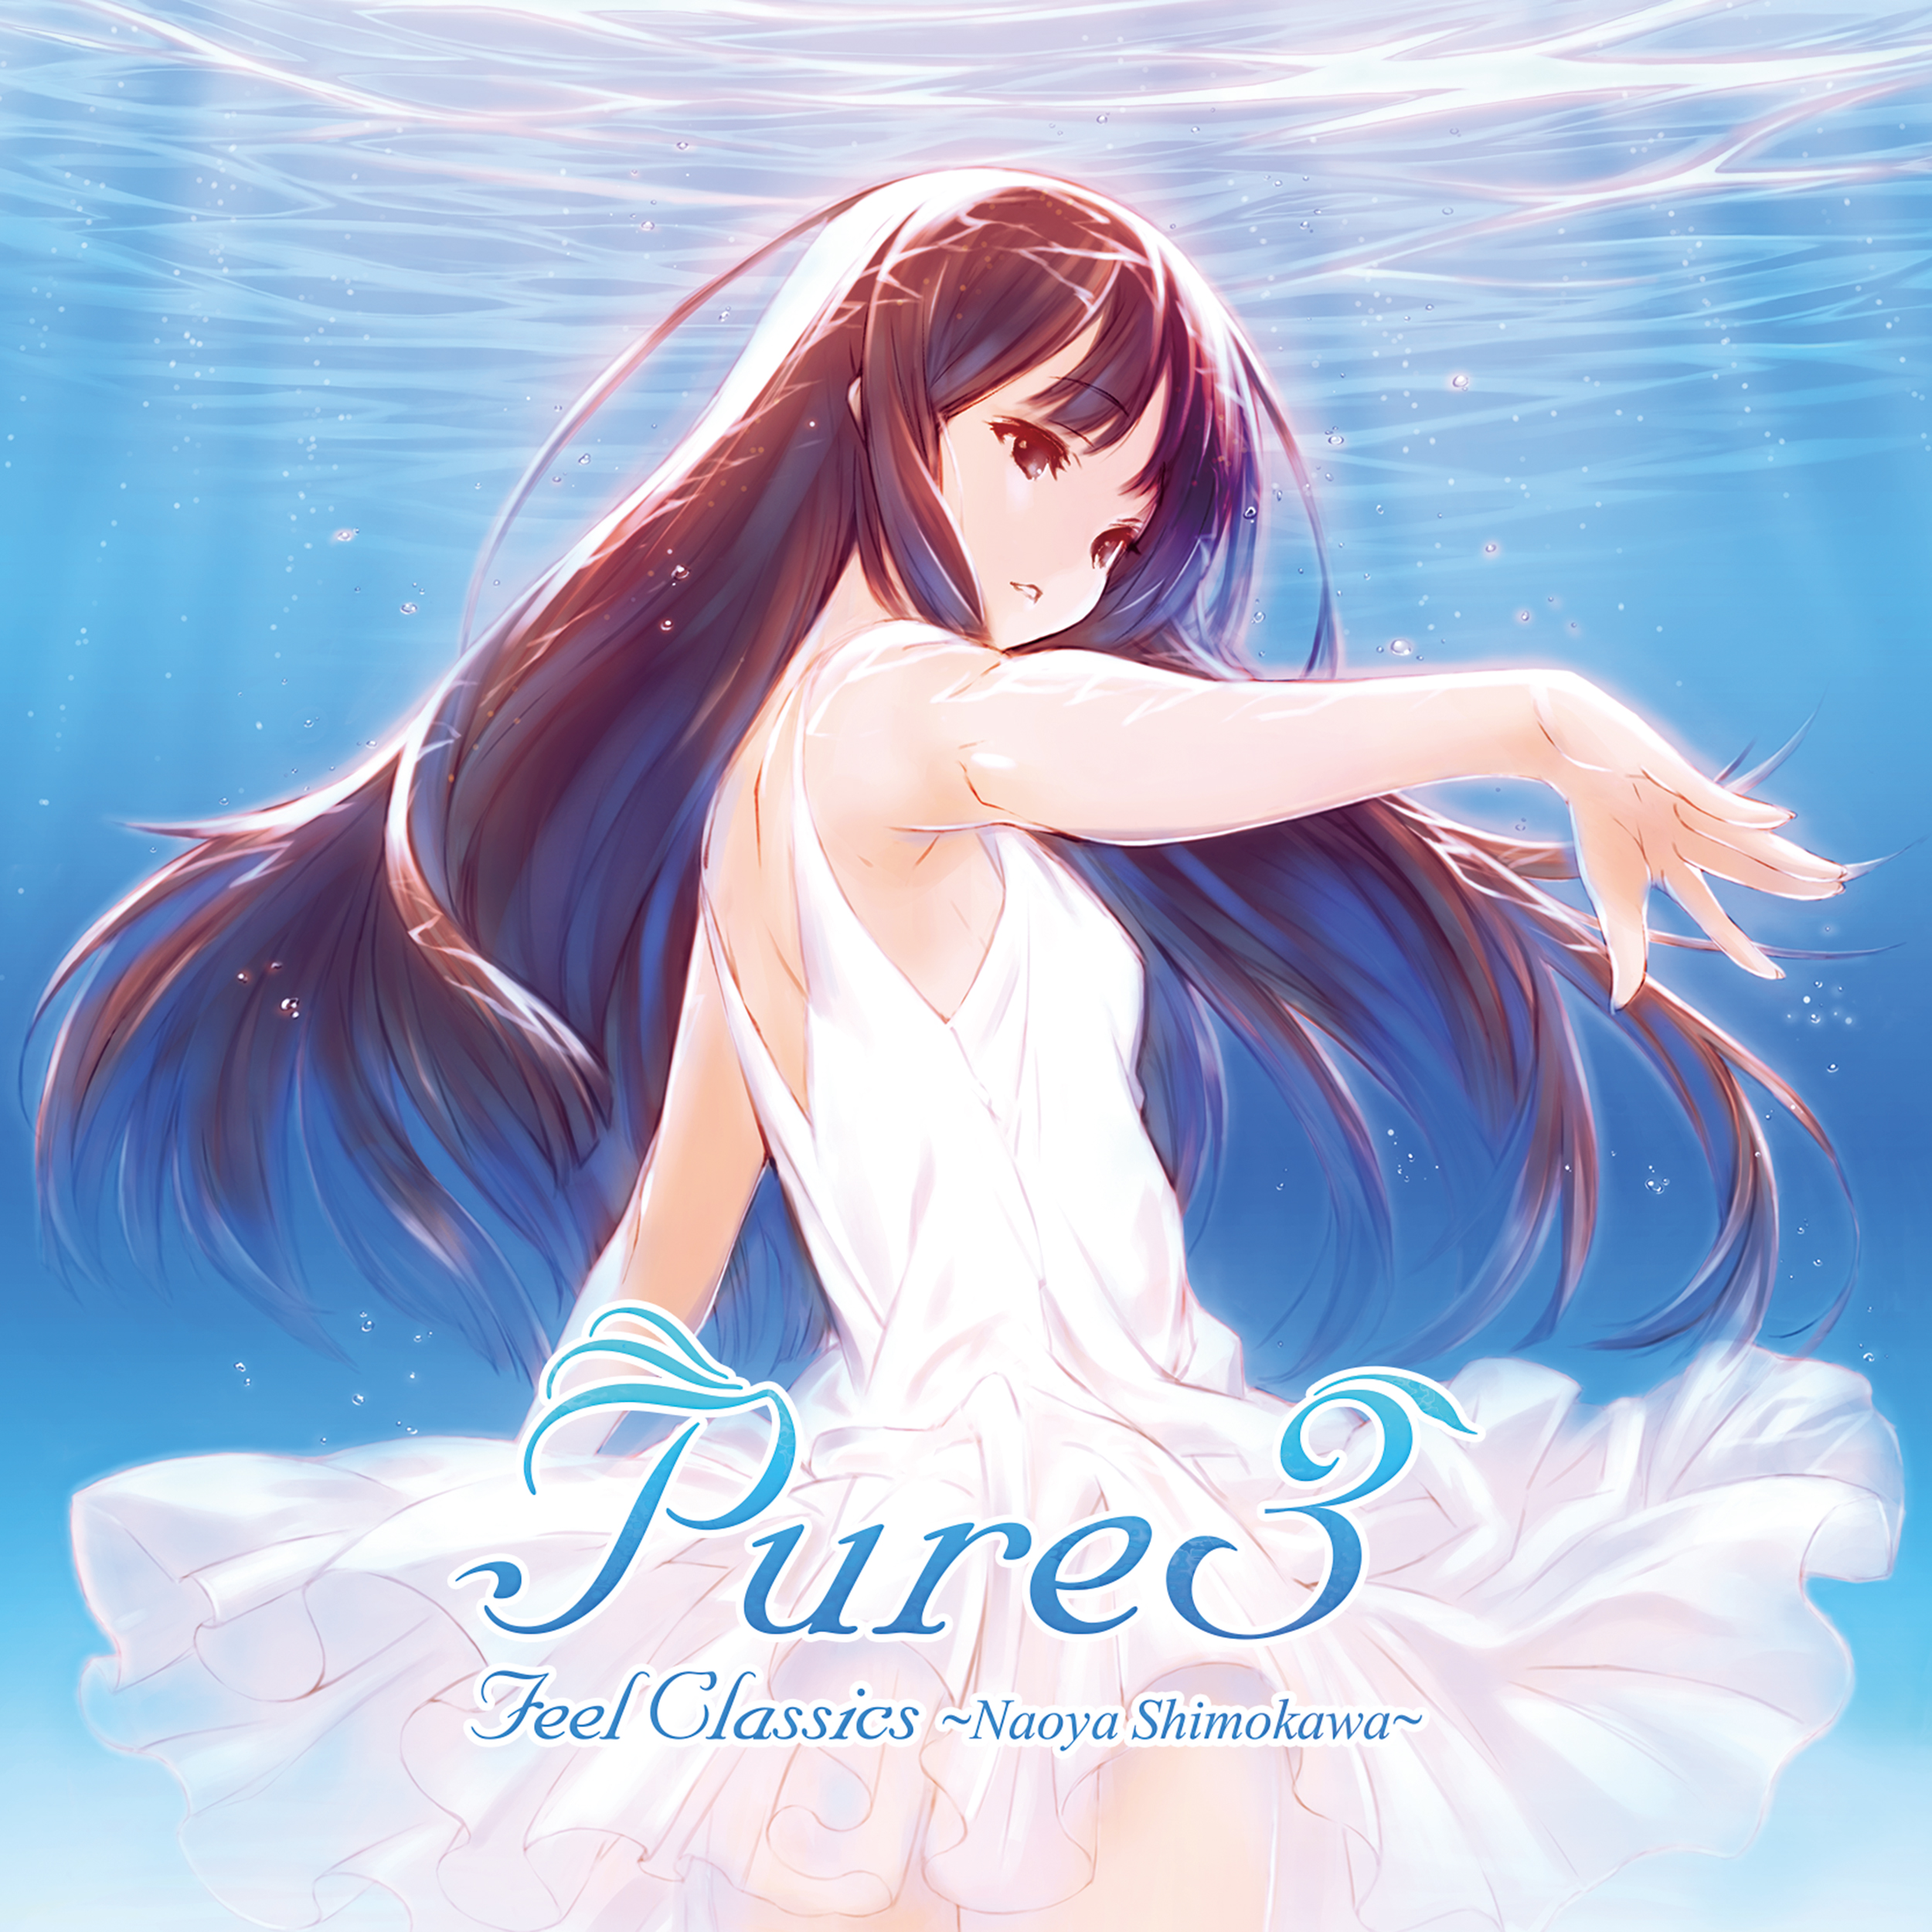 Suara - Pure3 - feel Classics Naoya Shimokawa (2017) [OTOTOY DFF DSD64]